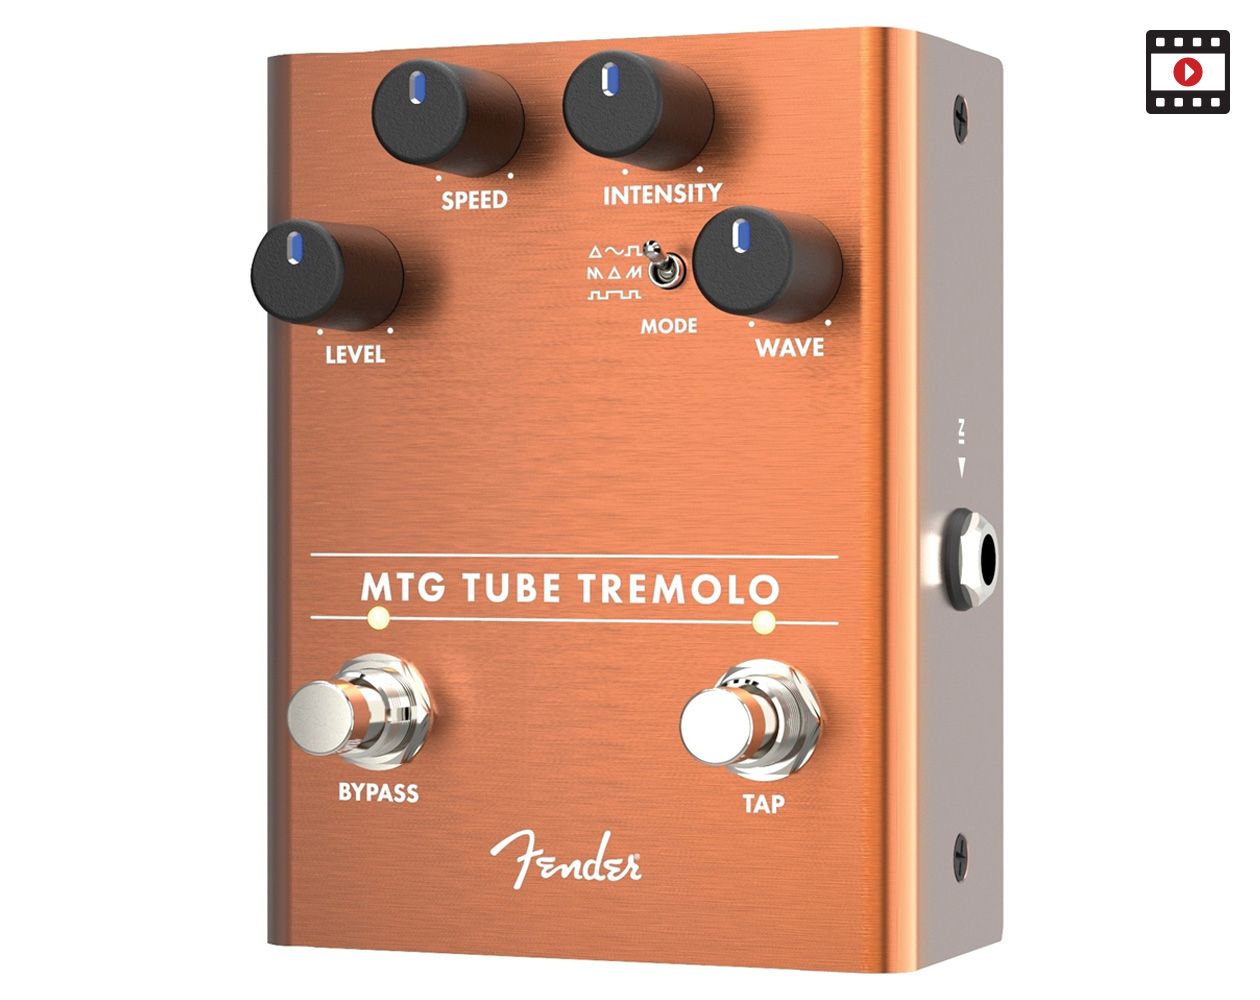 Fender MTG Tube Tremolo Review